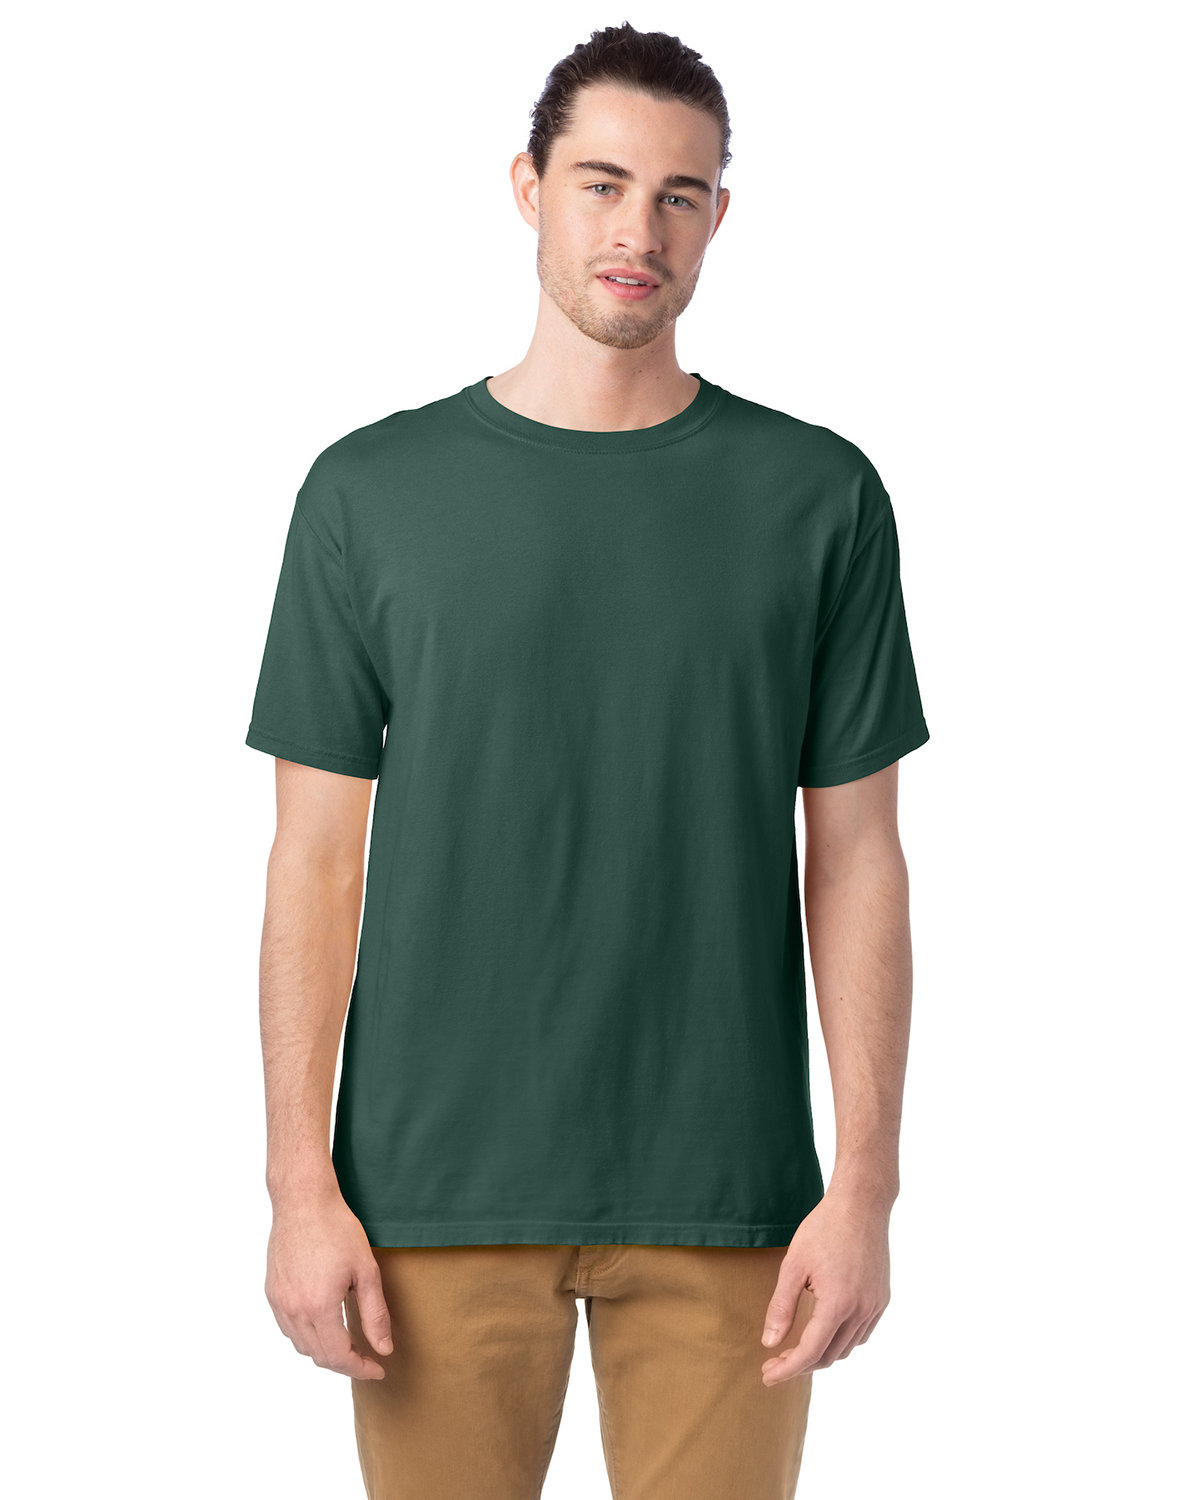 ComfortWash by Hanes Men's Garment-Dyed T-Shirt FIELD GREEN 